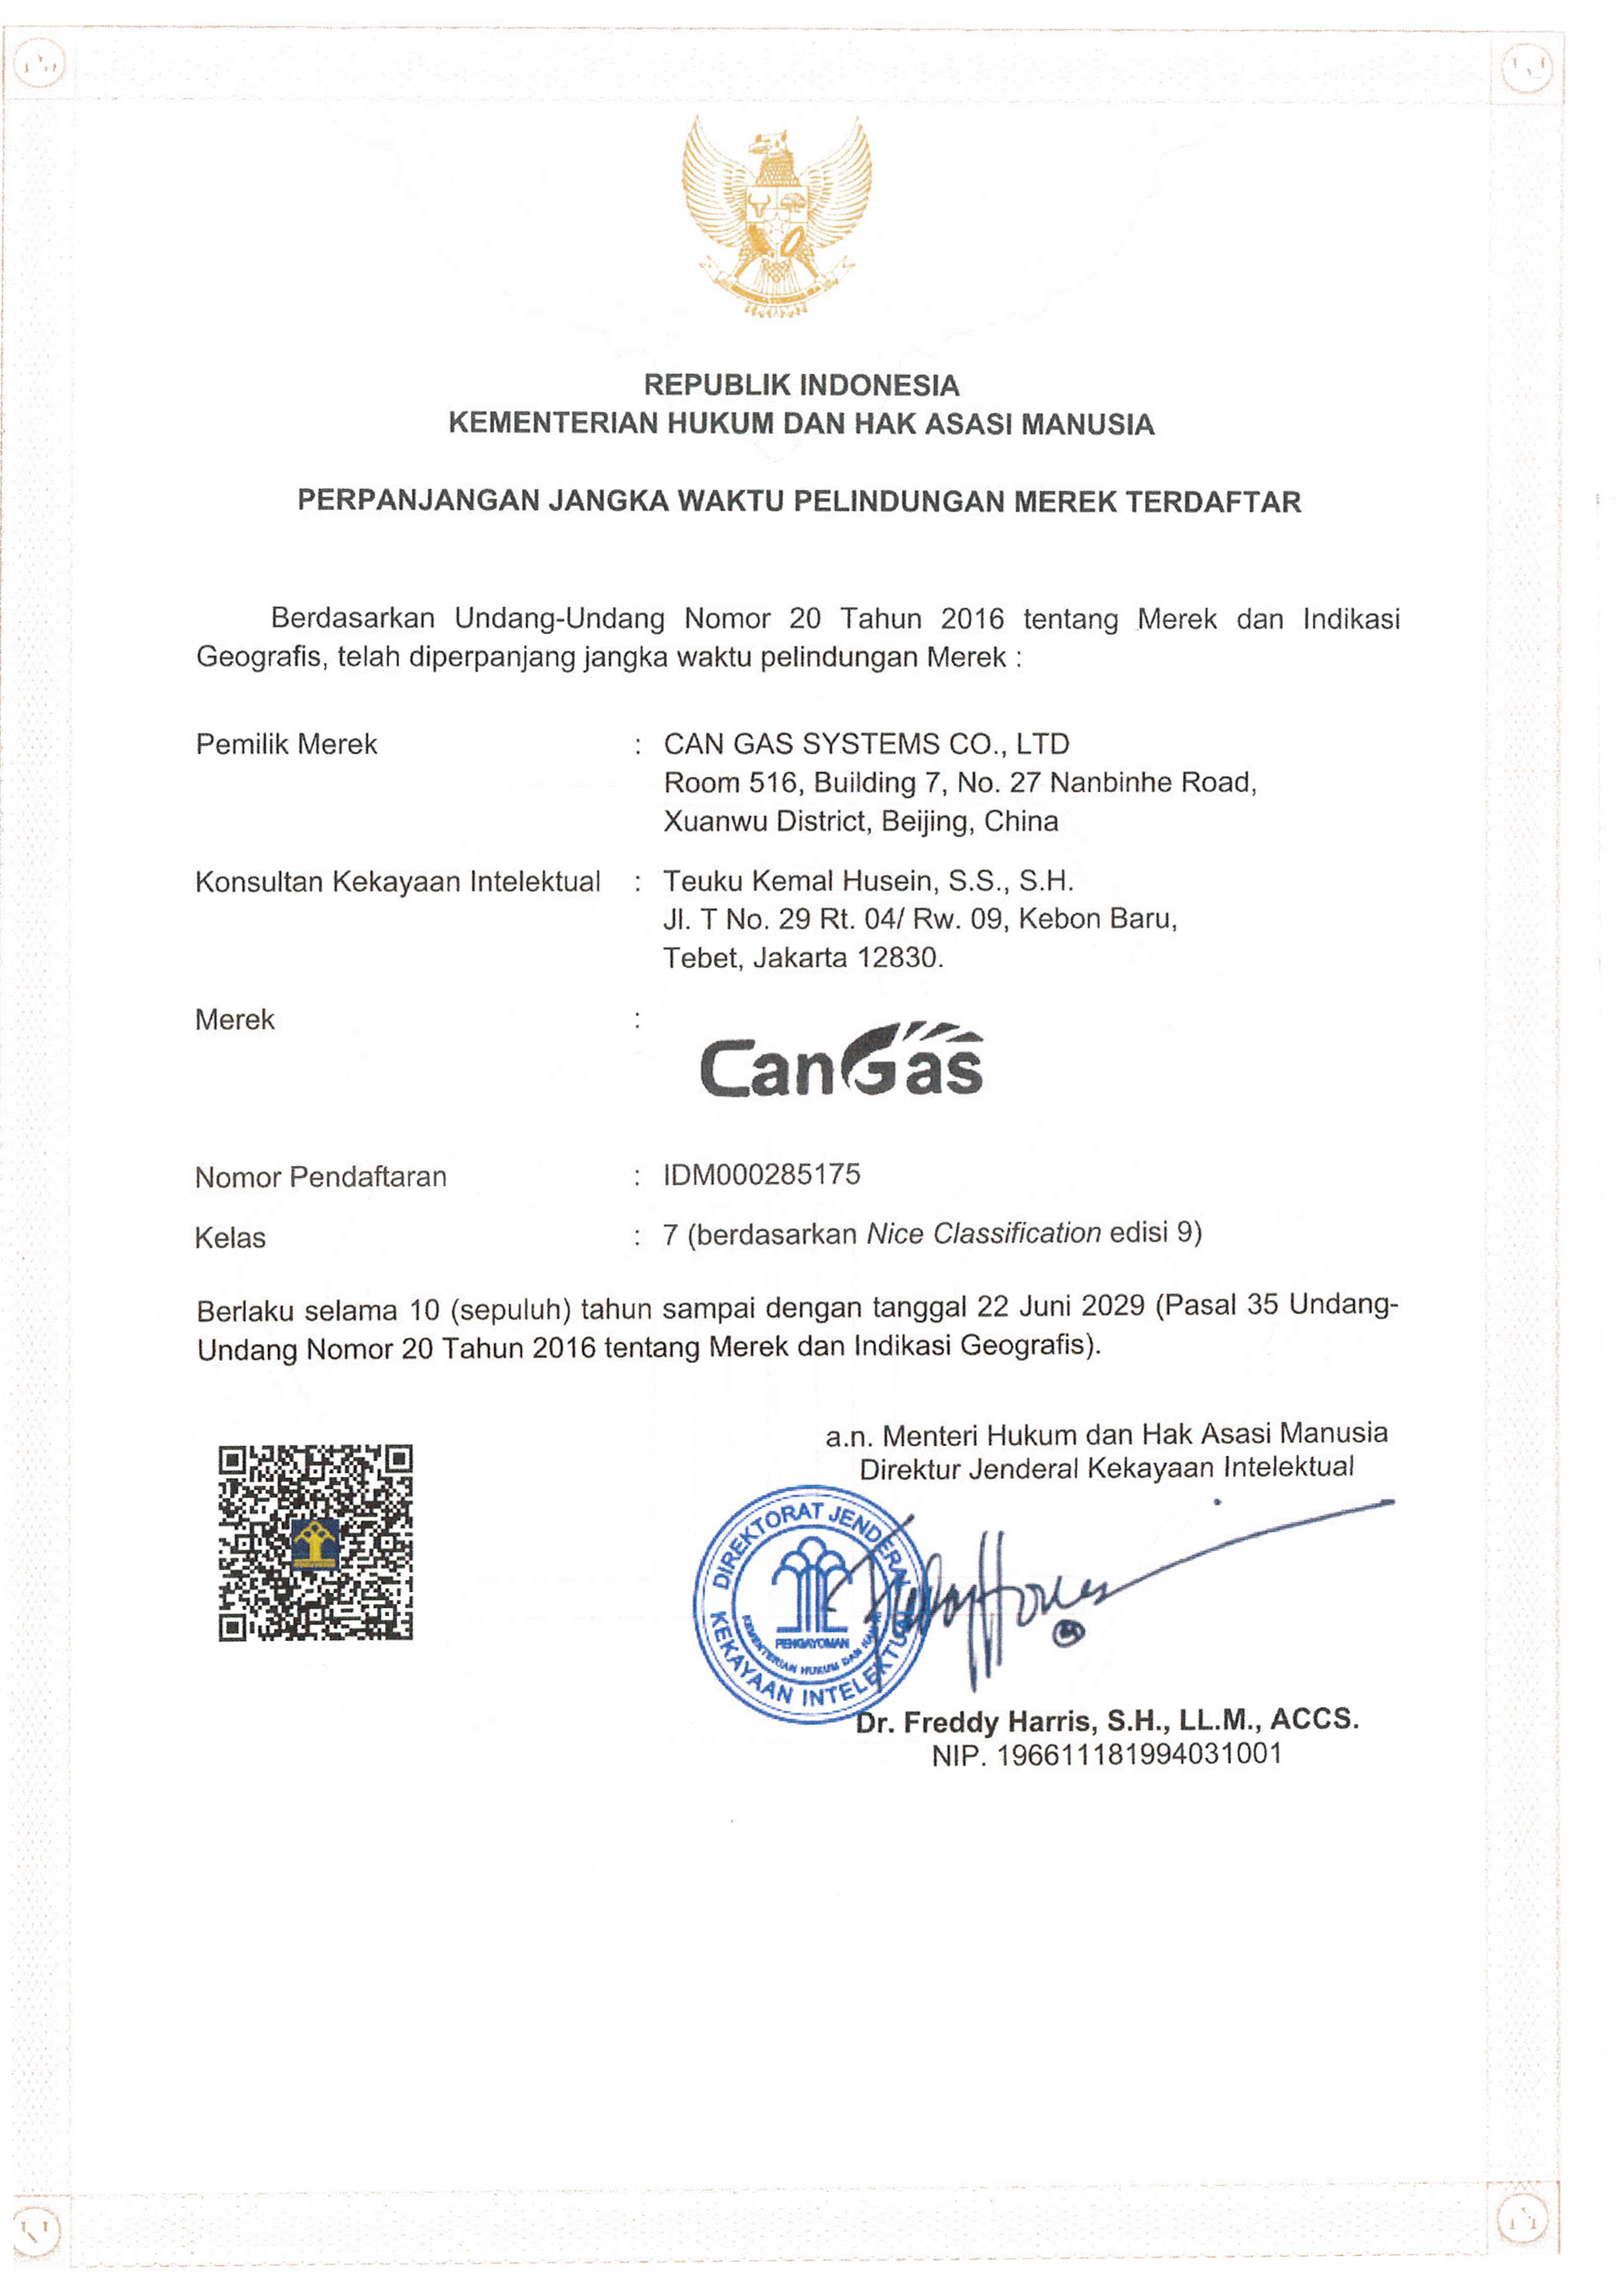 Indonesia Trademark Registration Certificate